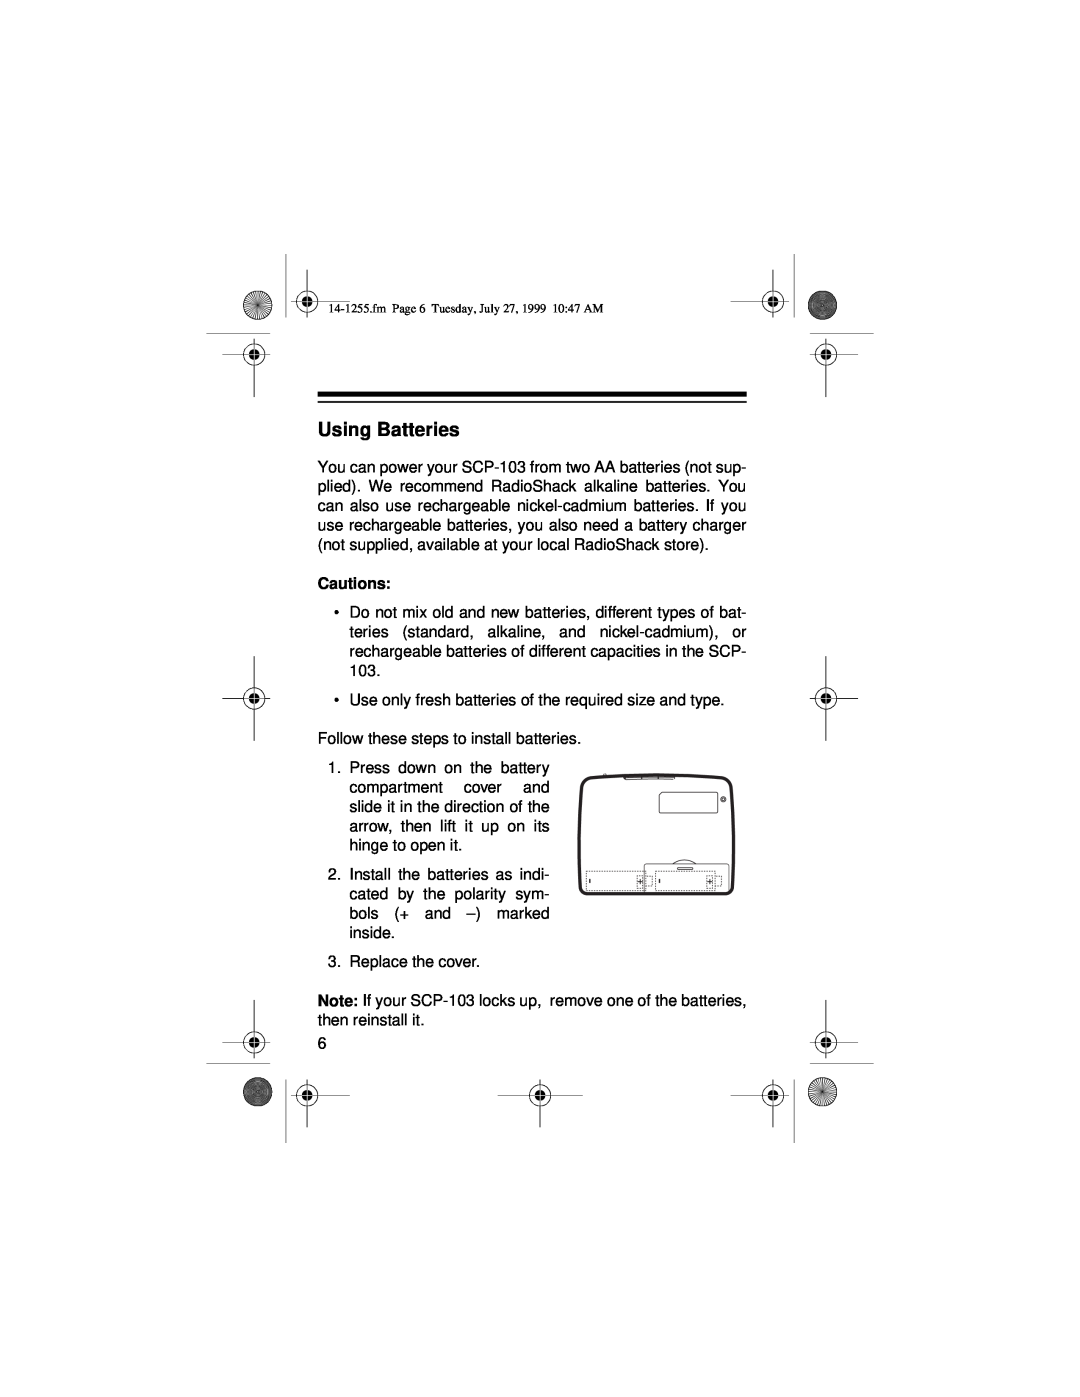 Optimus SCP-103 owner manual Using Batteries, Cautions 